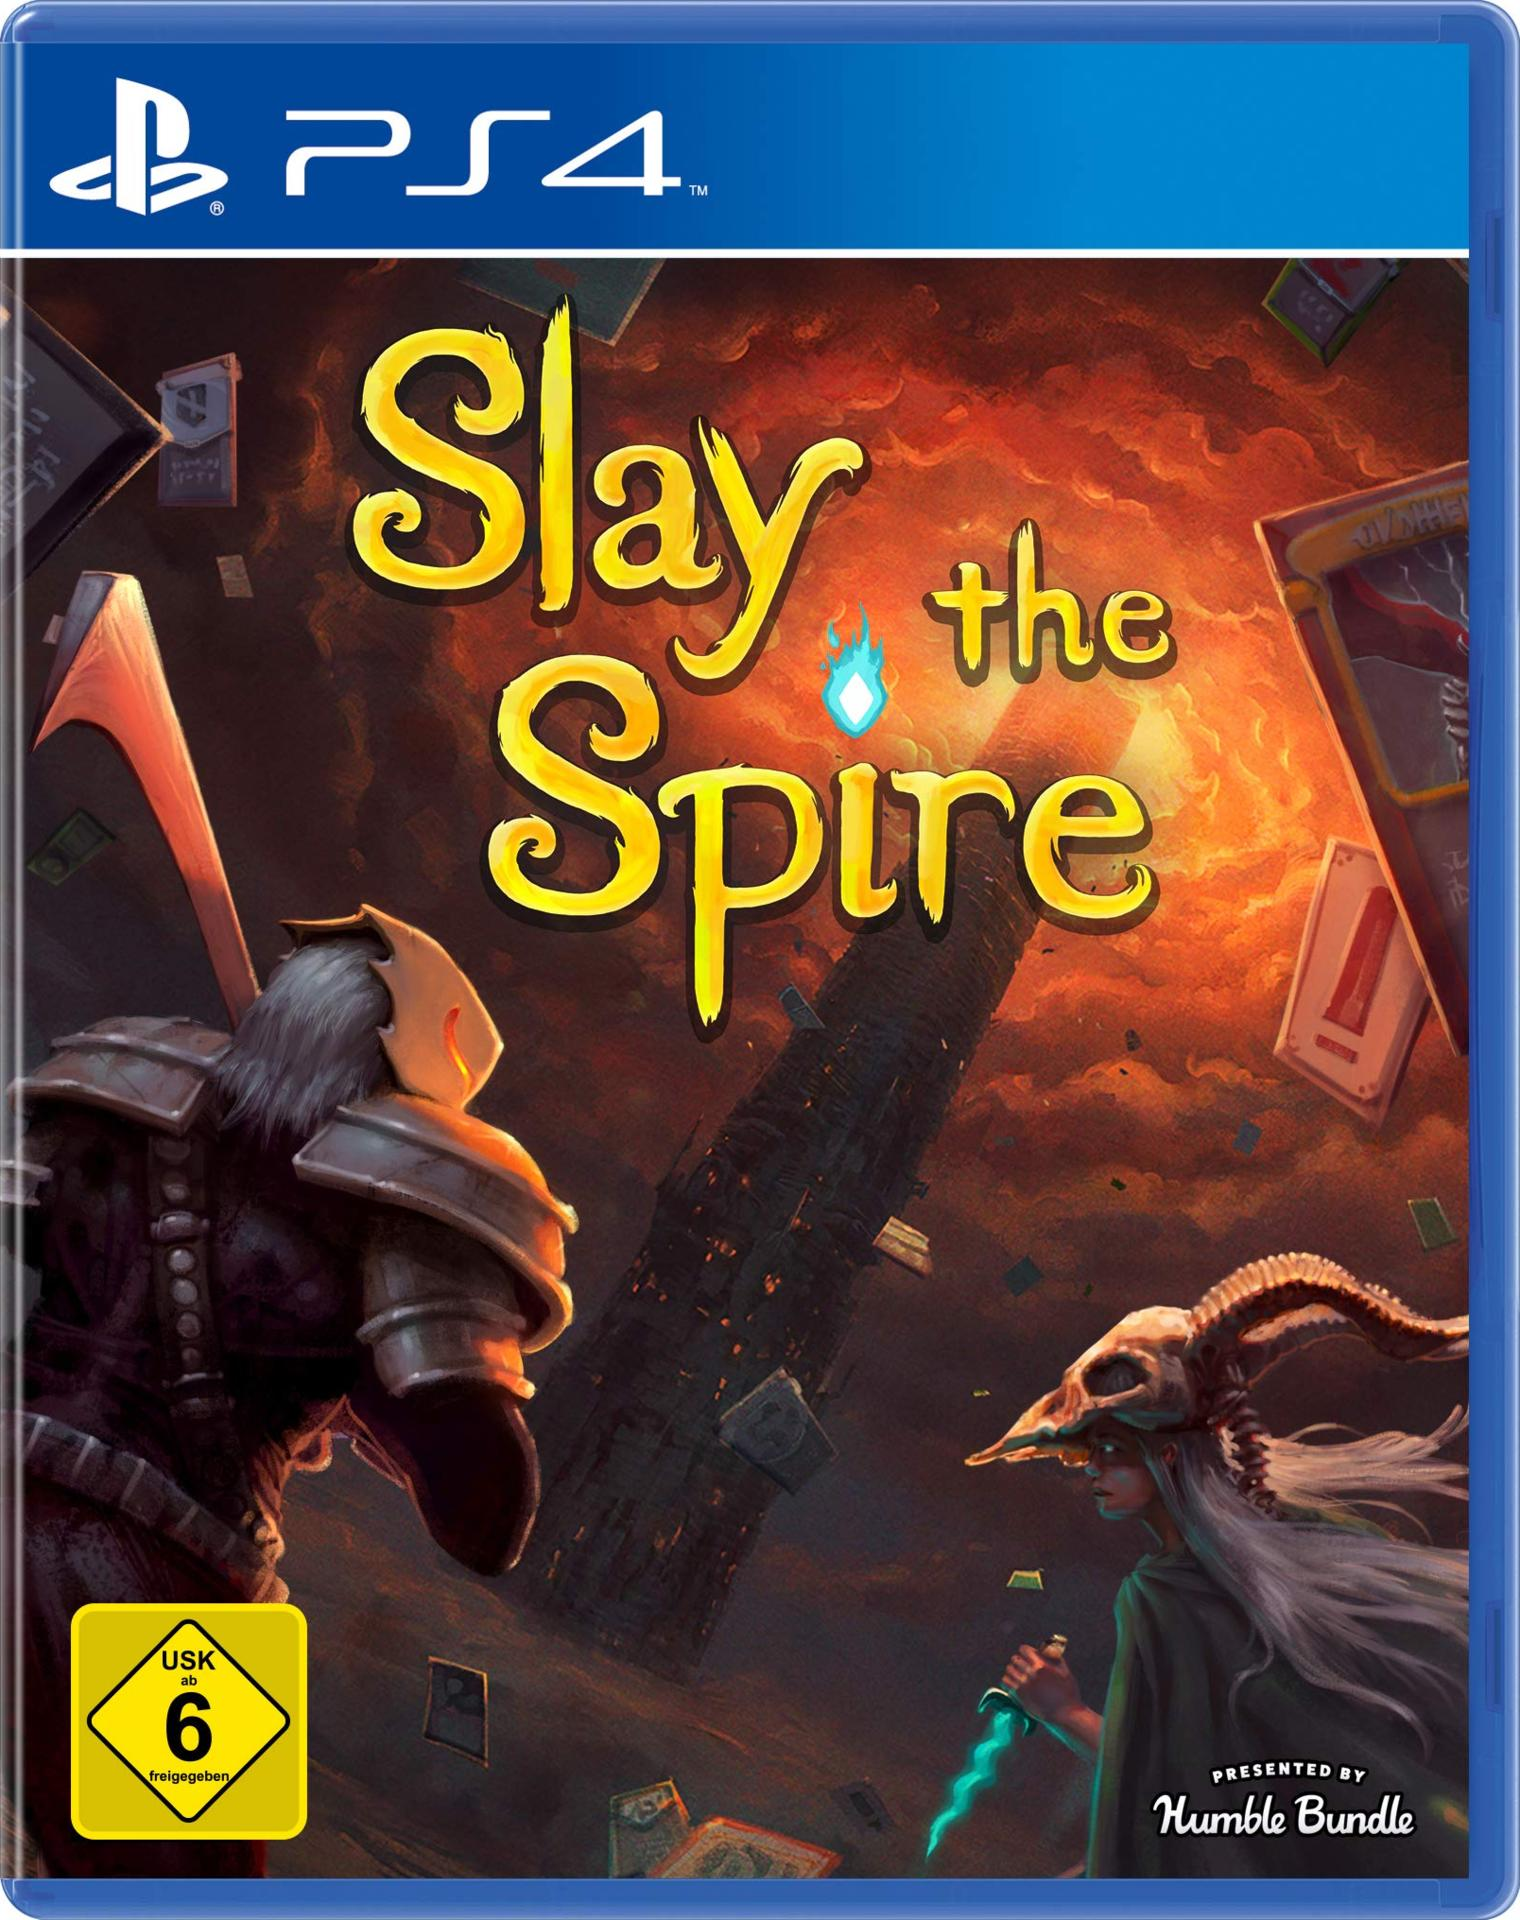 Slay the - [PlayStation 4] Spire